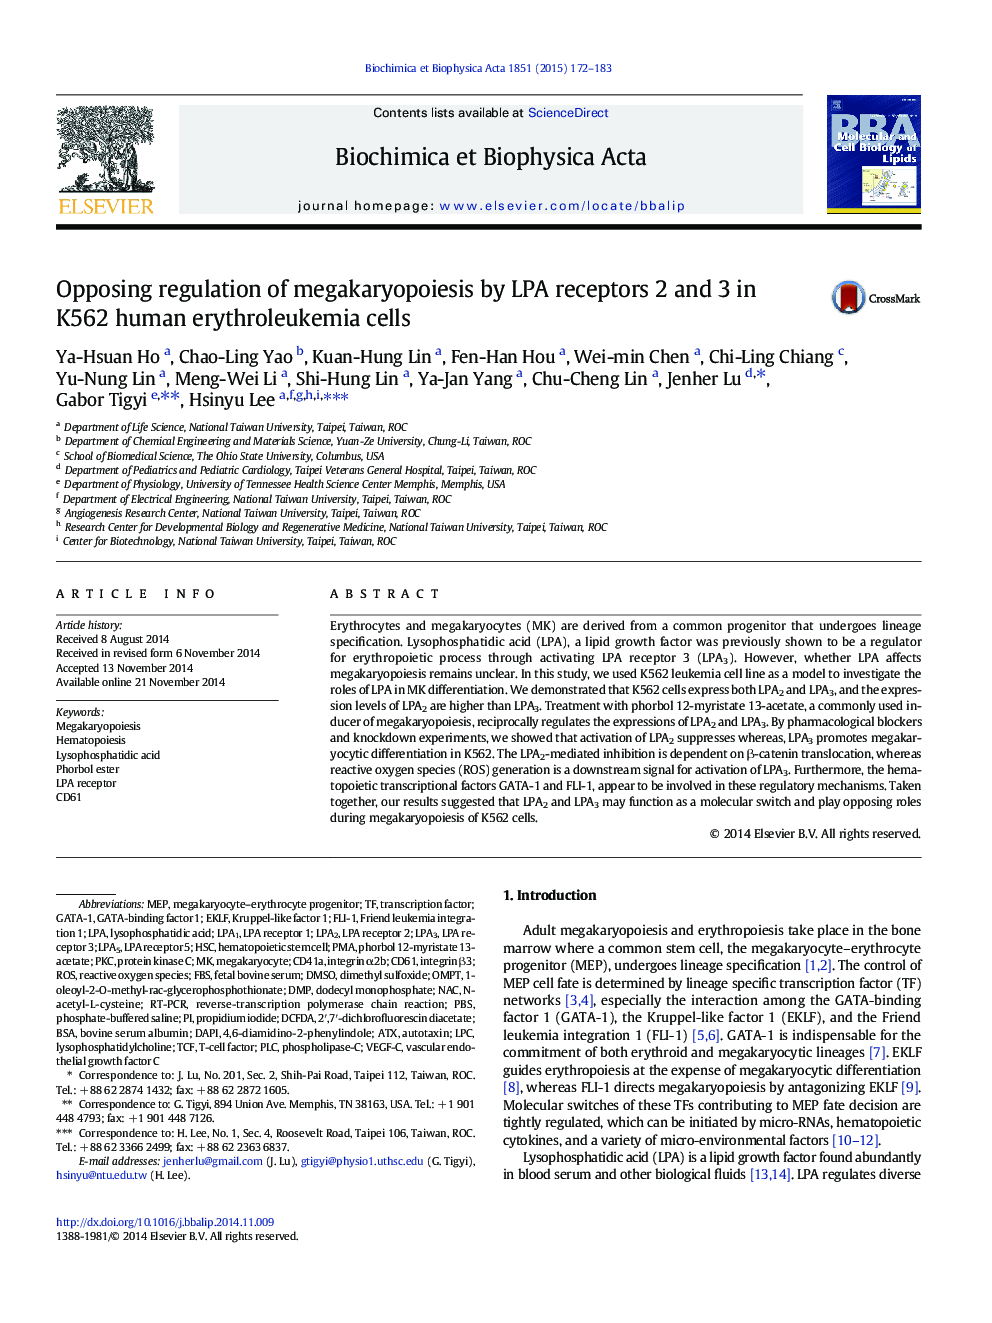 Opposing regulation of megakaryopoiesis by LPA receptors 2 and 3 in K562 human erythroleukemia cells